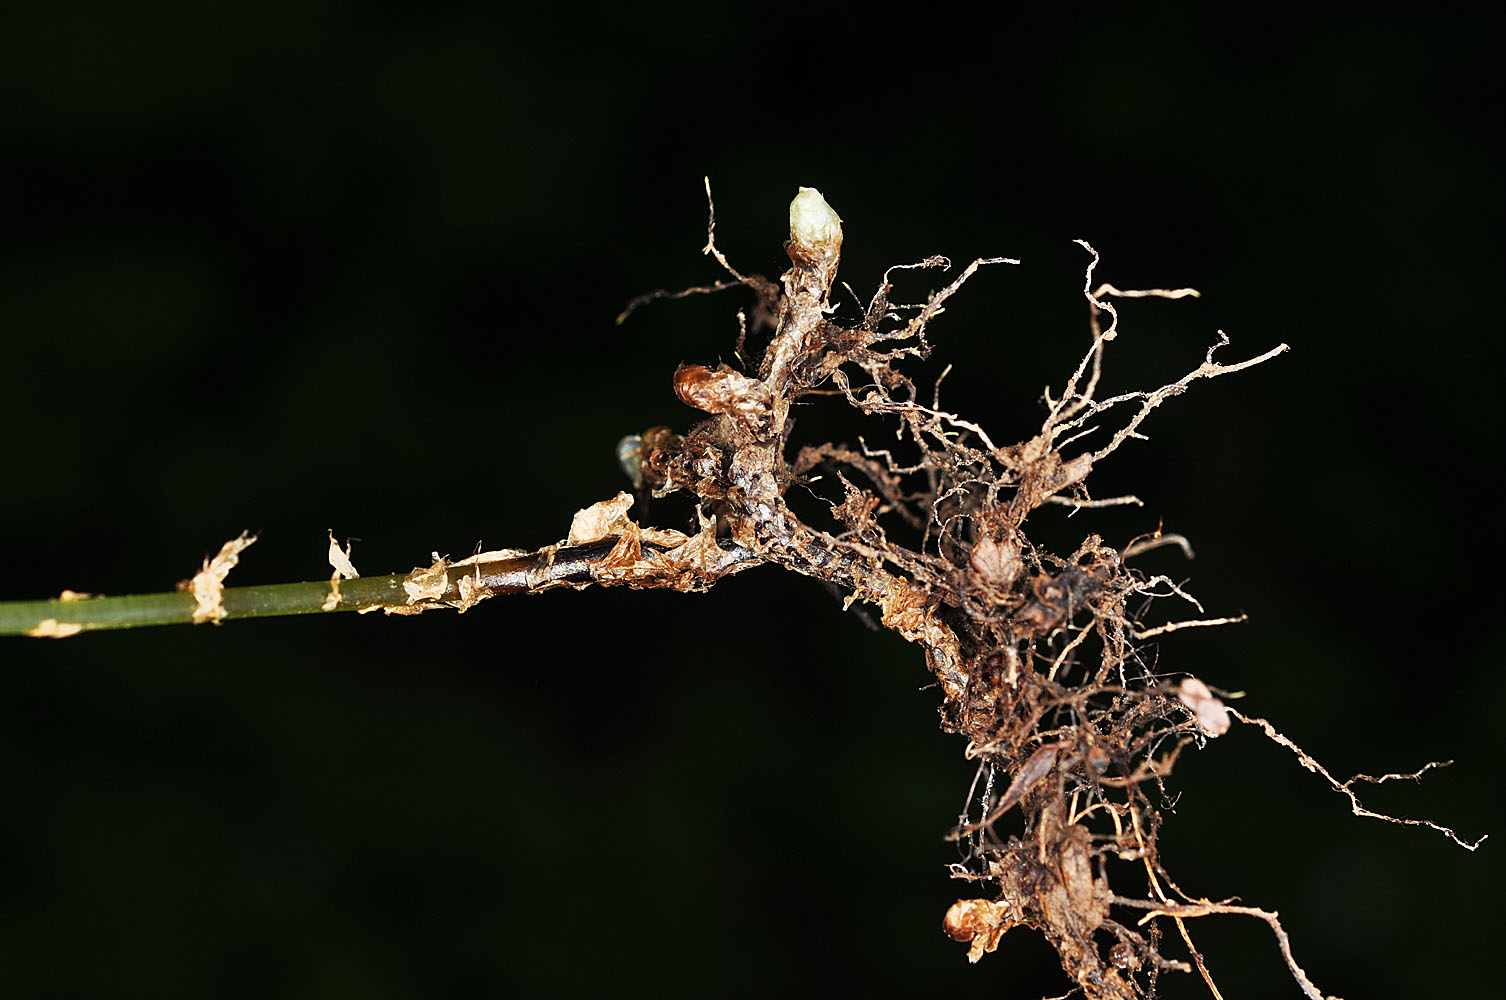 Flora of Eastern Washington Image: Gymnocarpium disjunctum